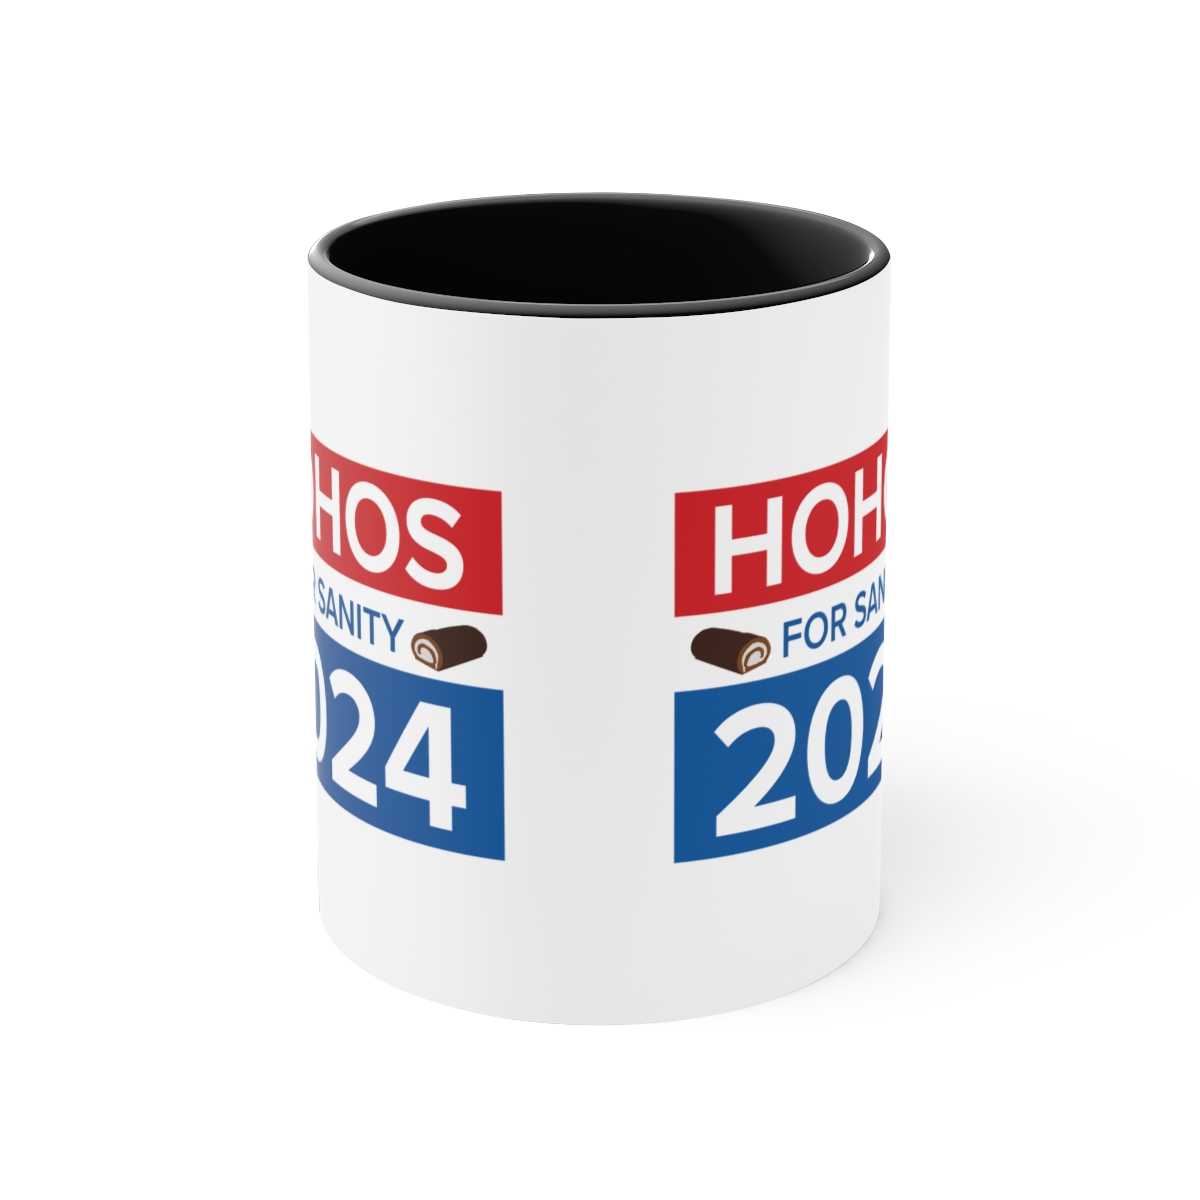 Ho Hos For Sanity 2024 (Accent Coffee Mug, 11oz) product thumbnail image